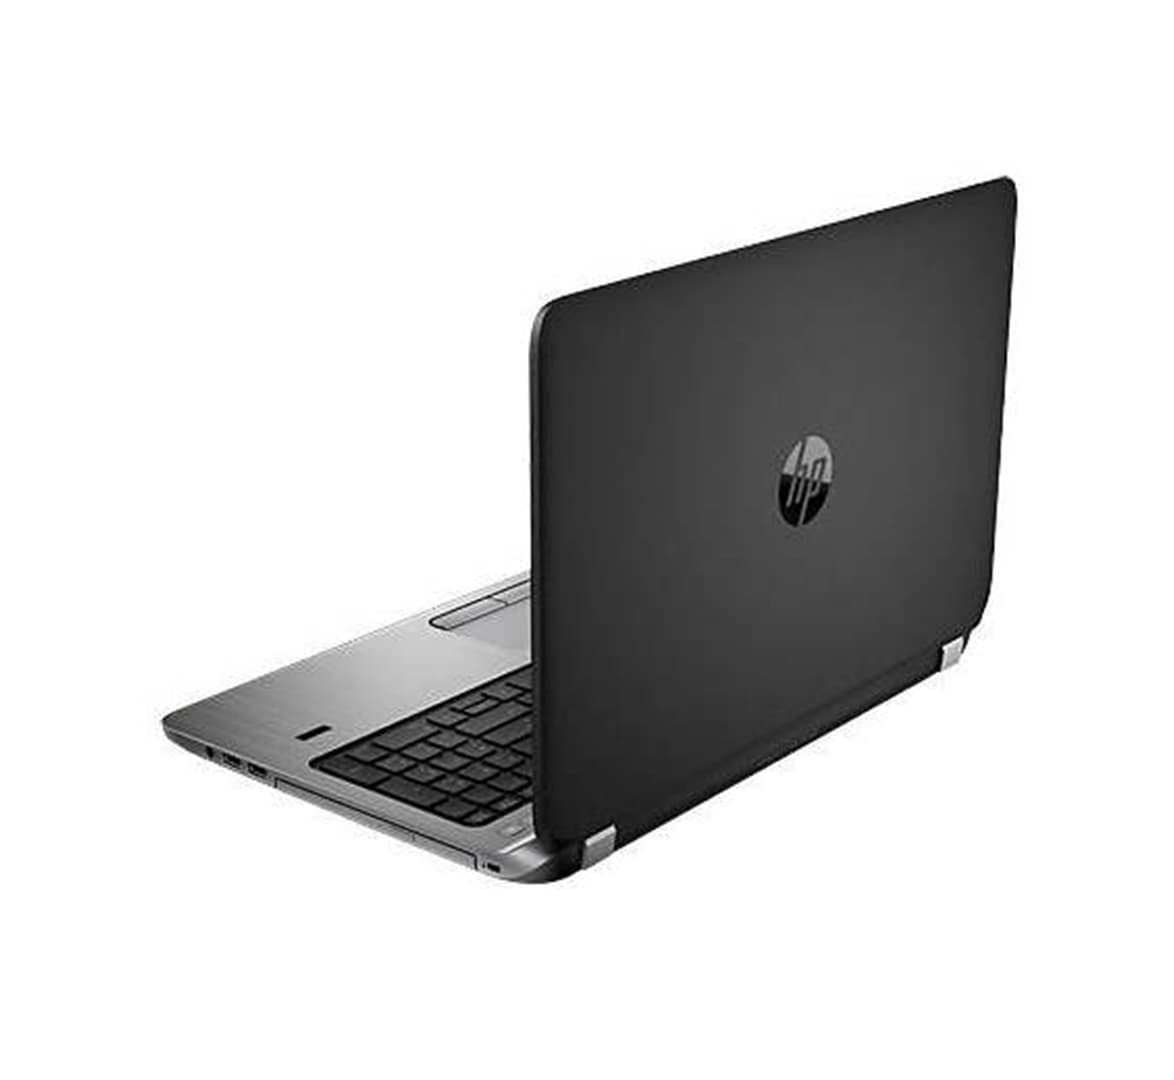 HP ProBook 450 G2 Business Laptop, Intel Core i5-4th Generation CPU, 4GB RAM, 500GB HDD, 15.6 inch Display, Windows 10 Pro, Refurbished Laptop